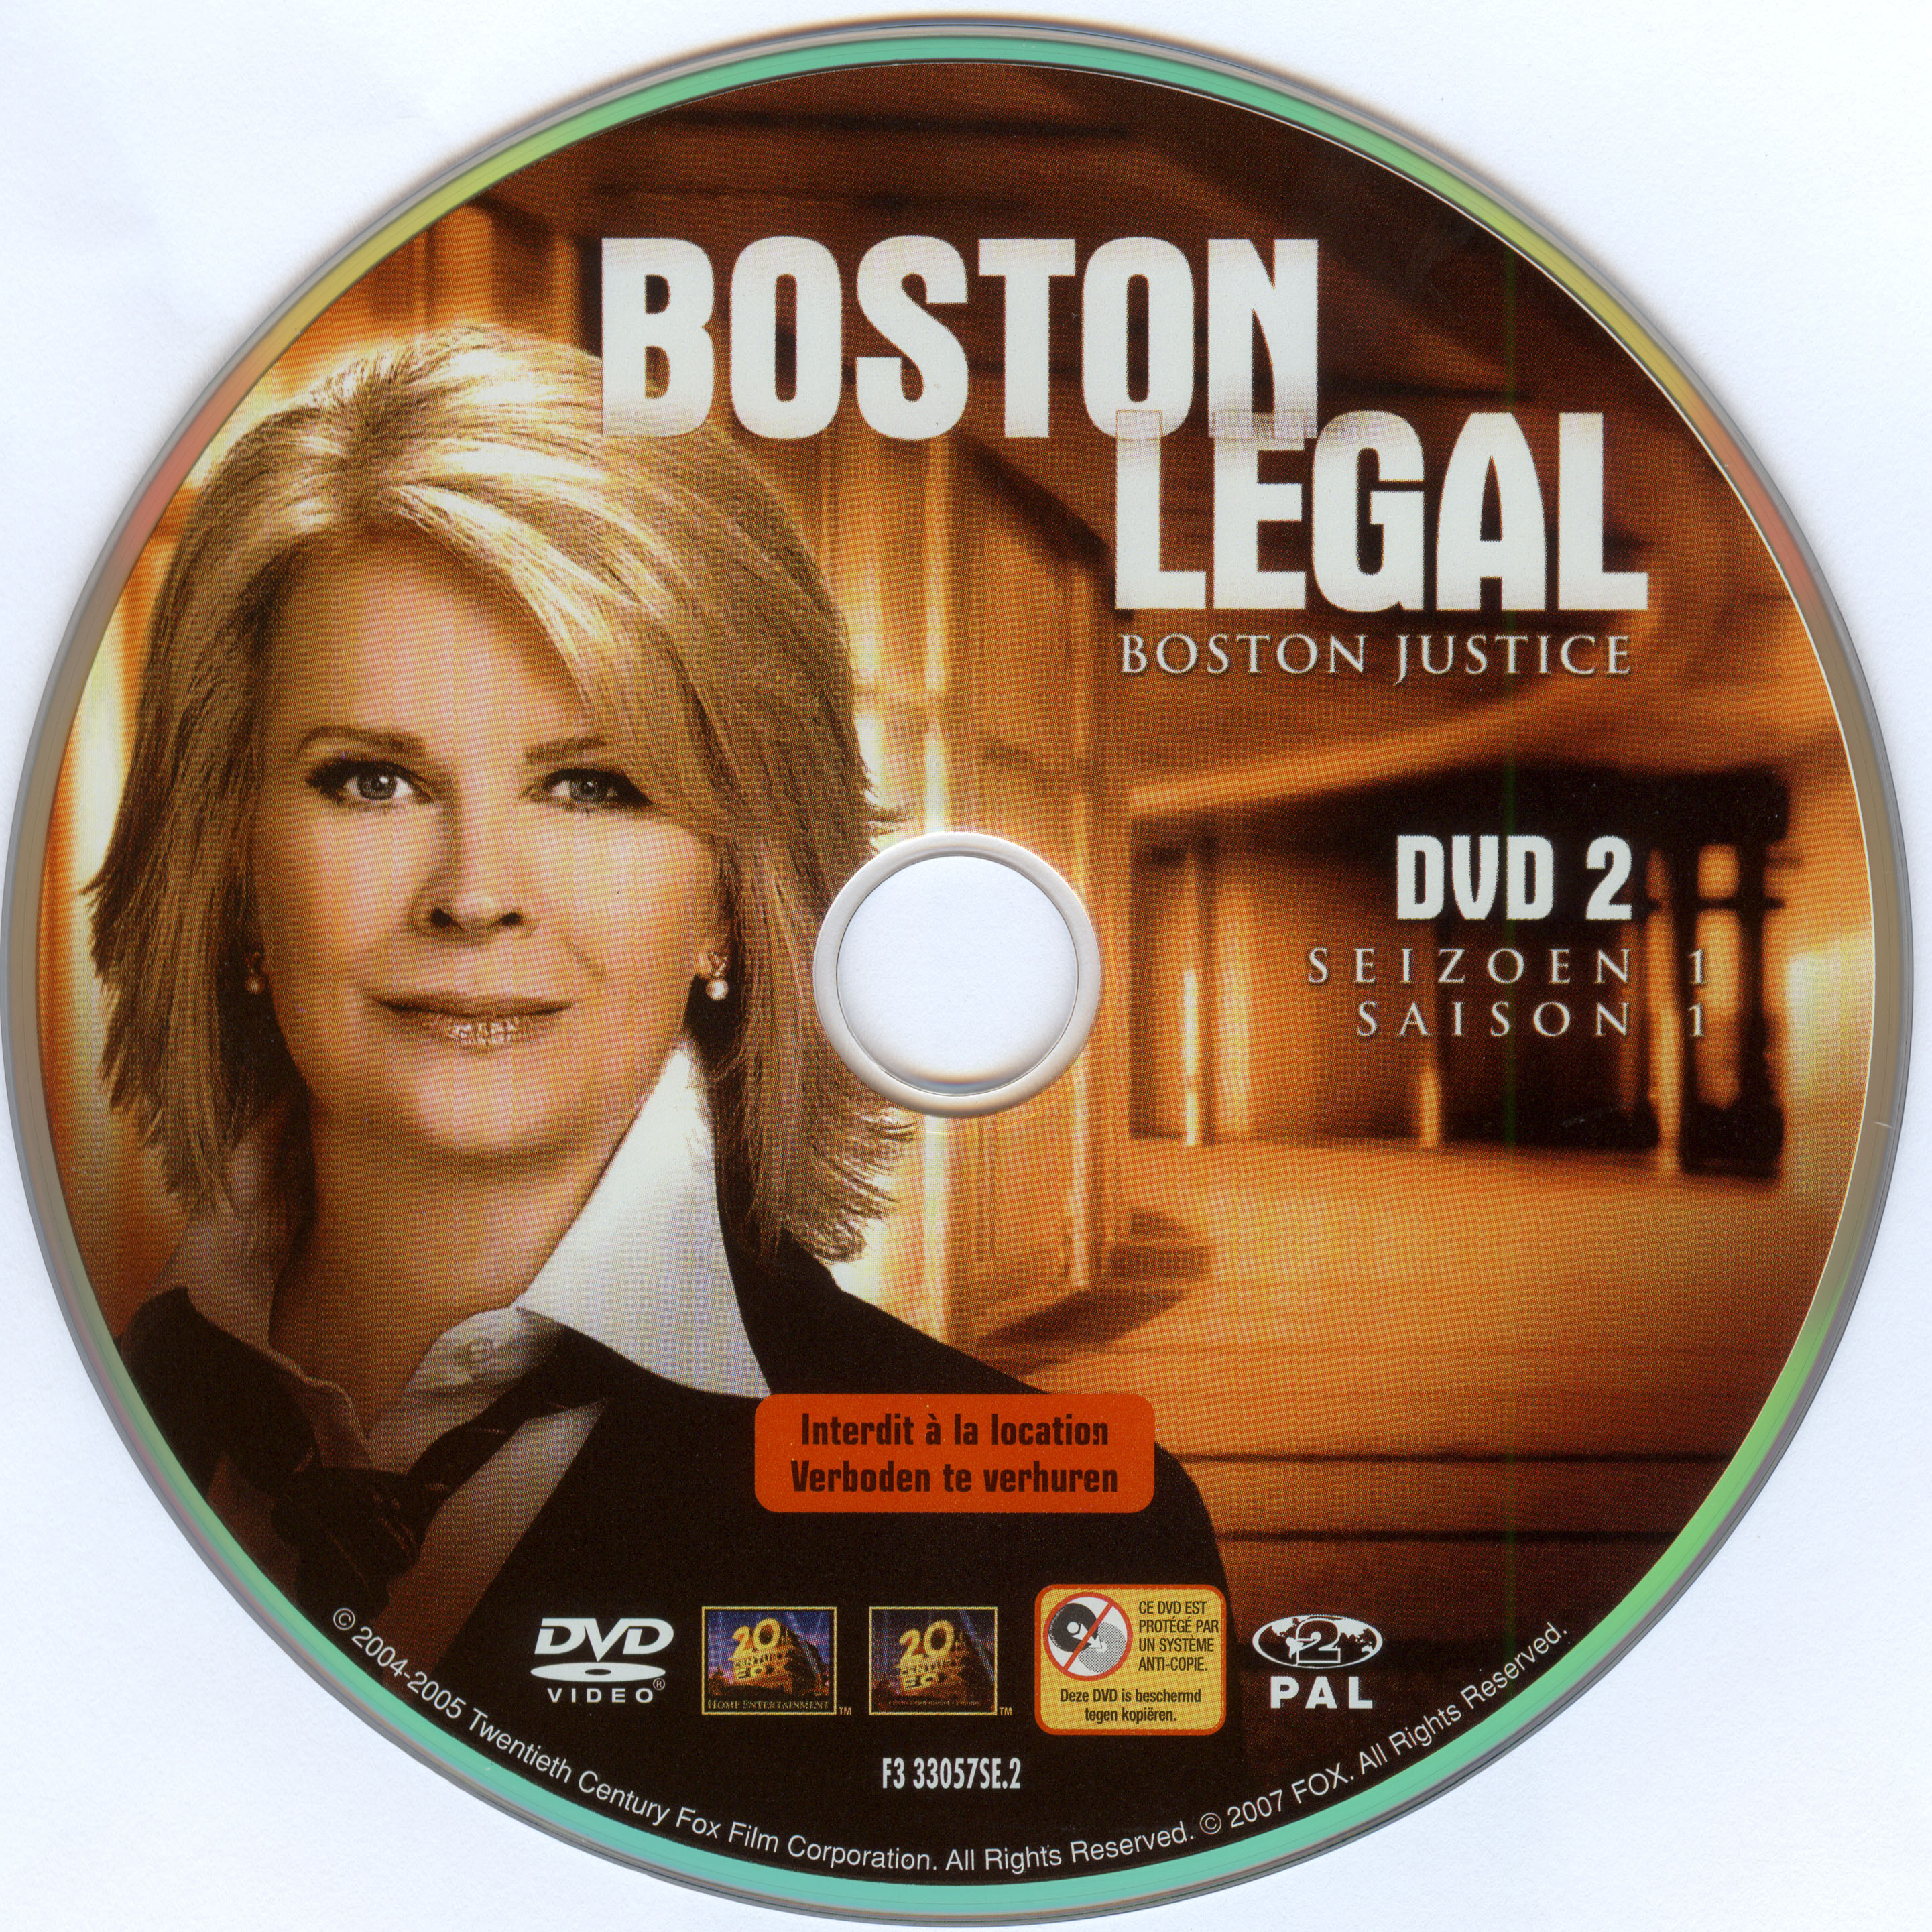 Boston legal - Boston justice Saison 1 DISC 2